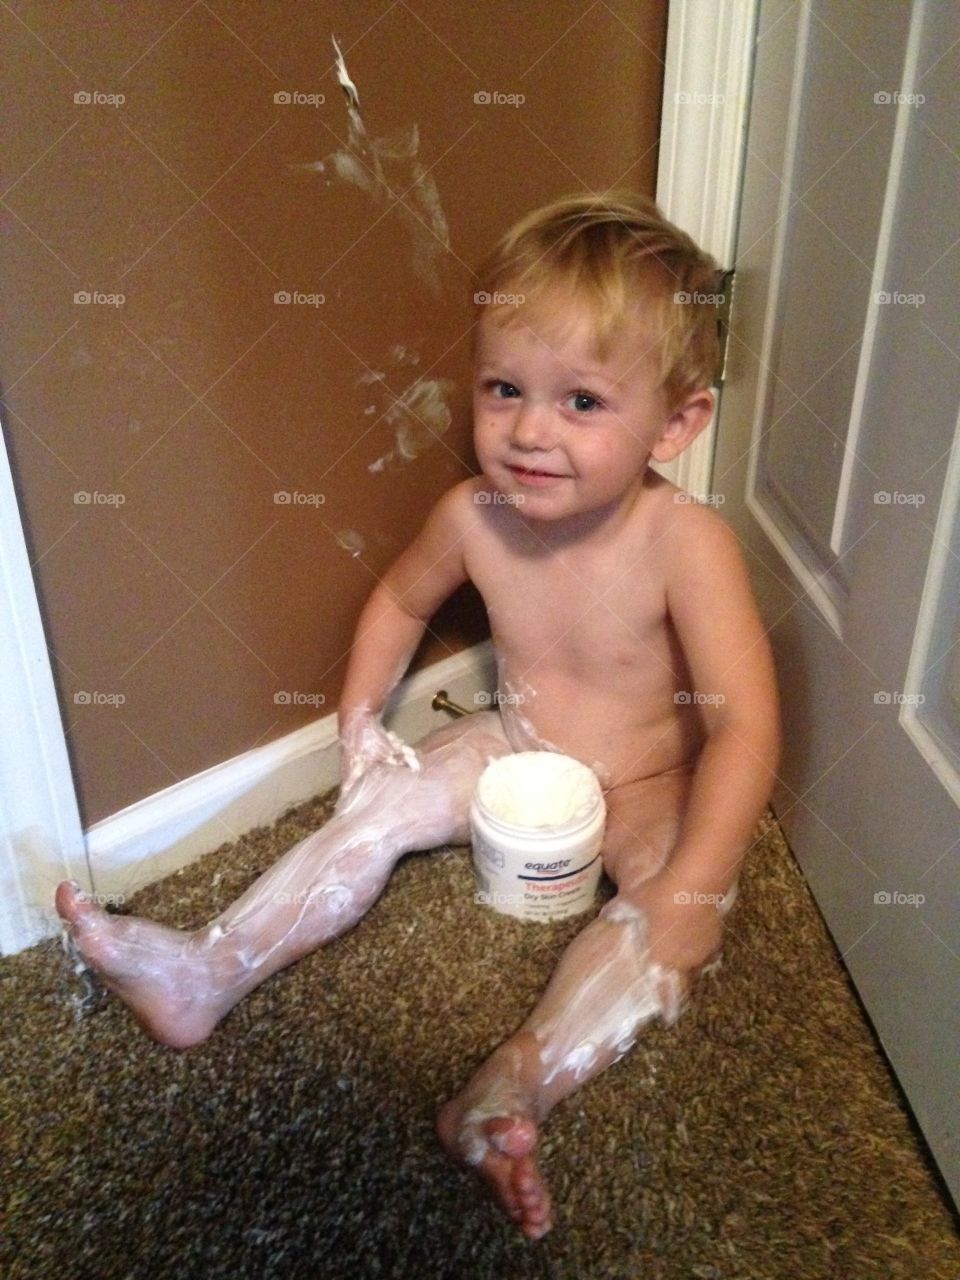 Child applying cream on body